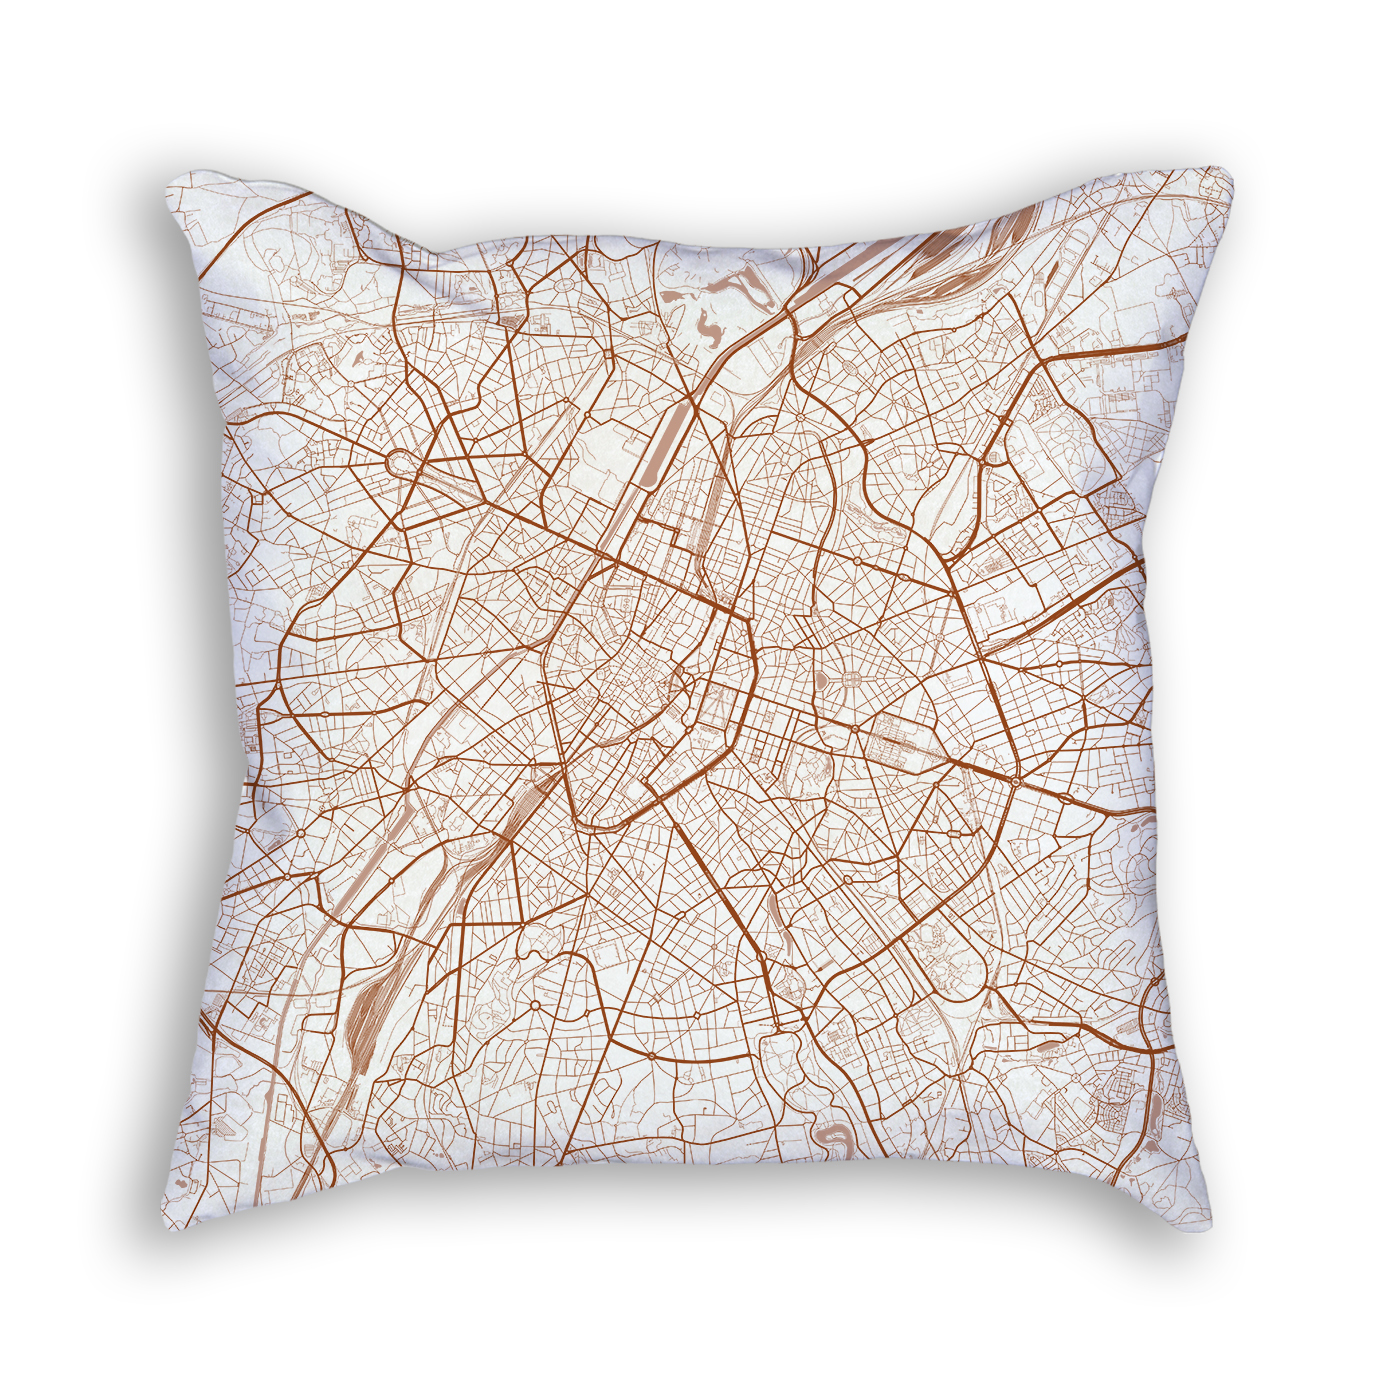 Brussels Belgium City Map Art Decorative Throw Pillow